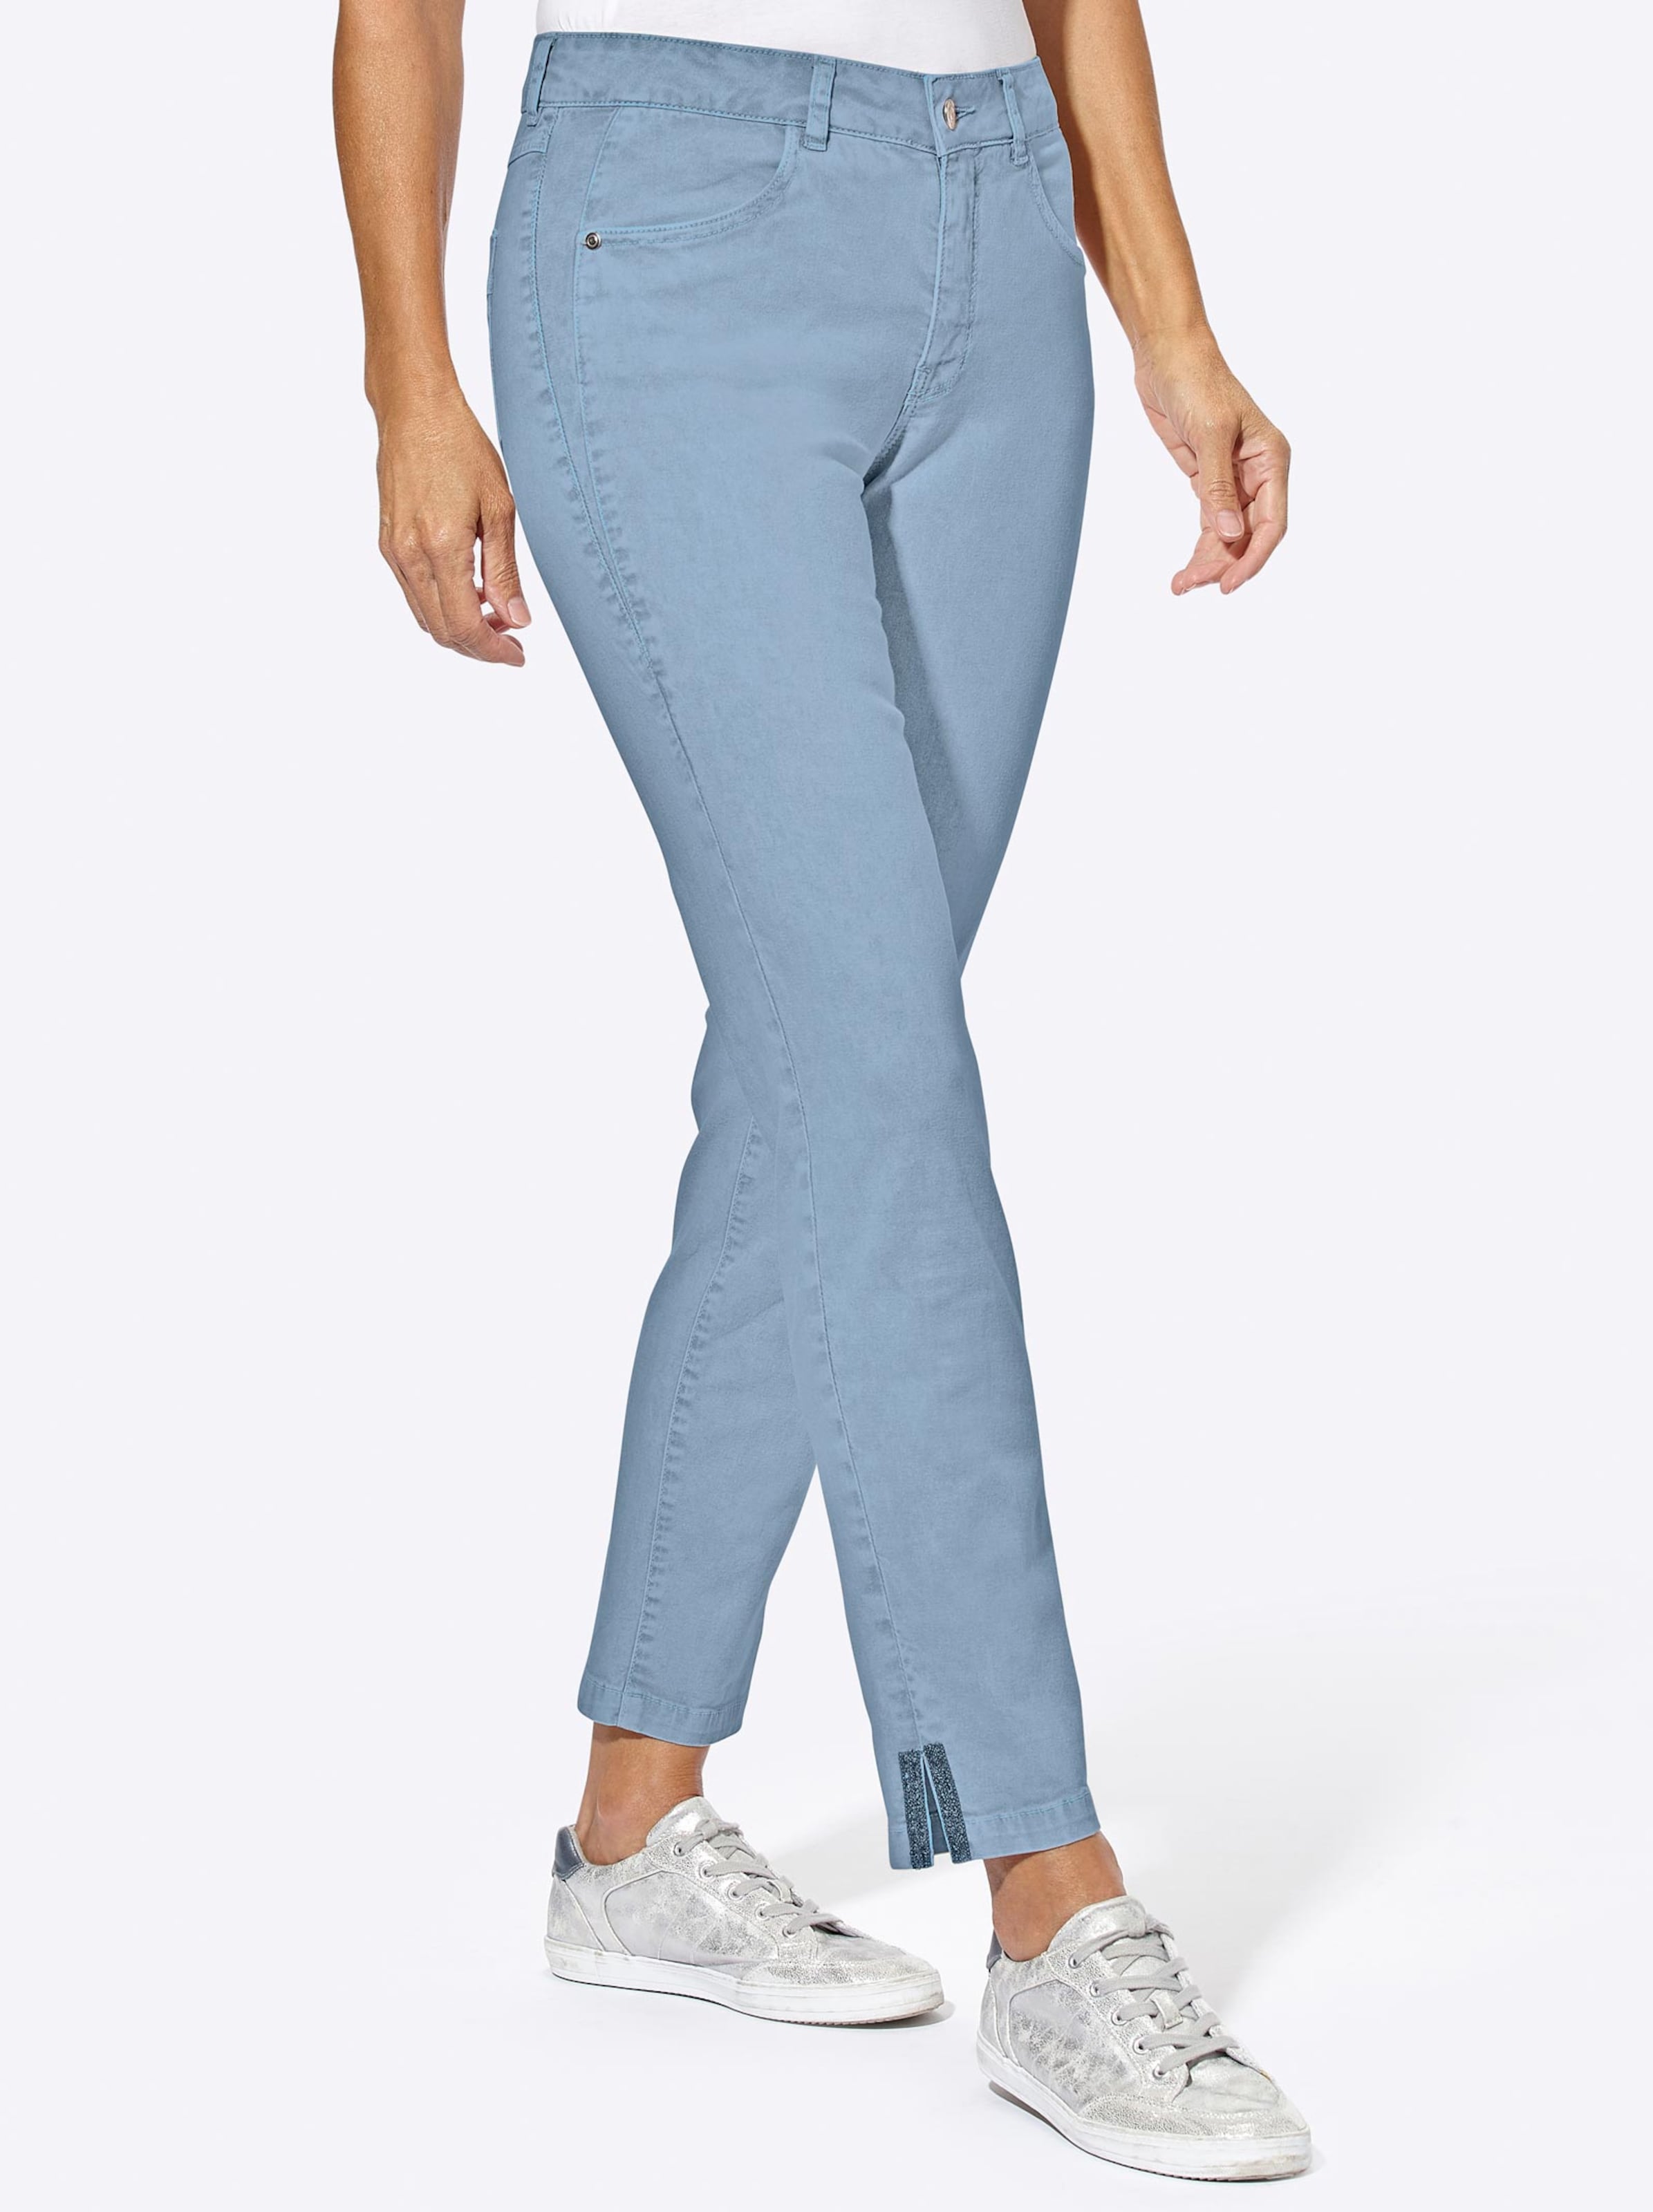 Damenmode Jeans Stretch-Jeans in blue-bleached 